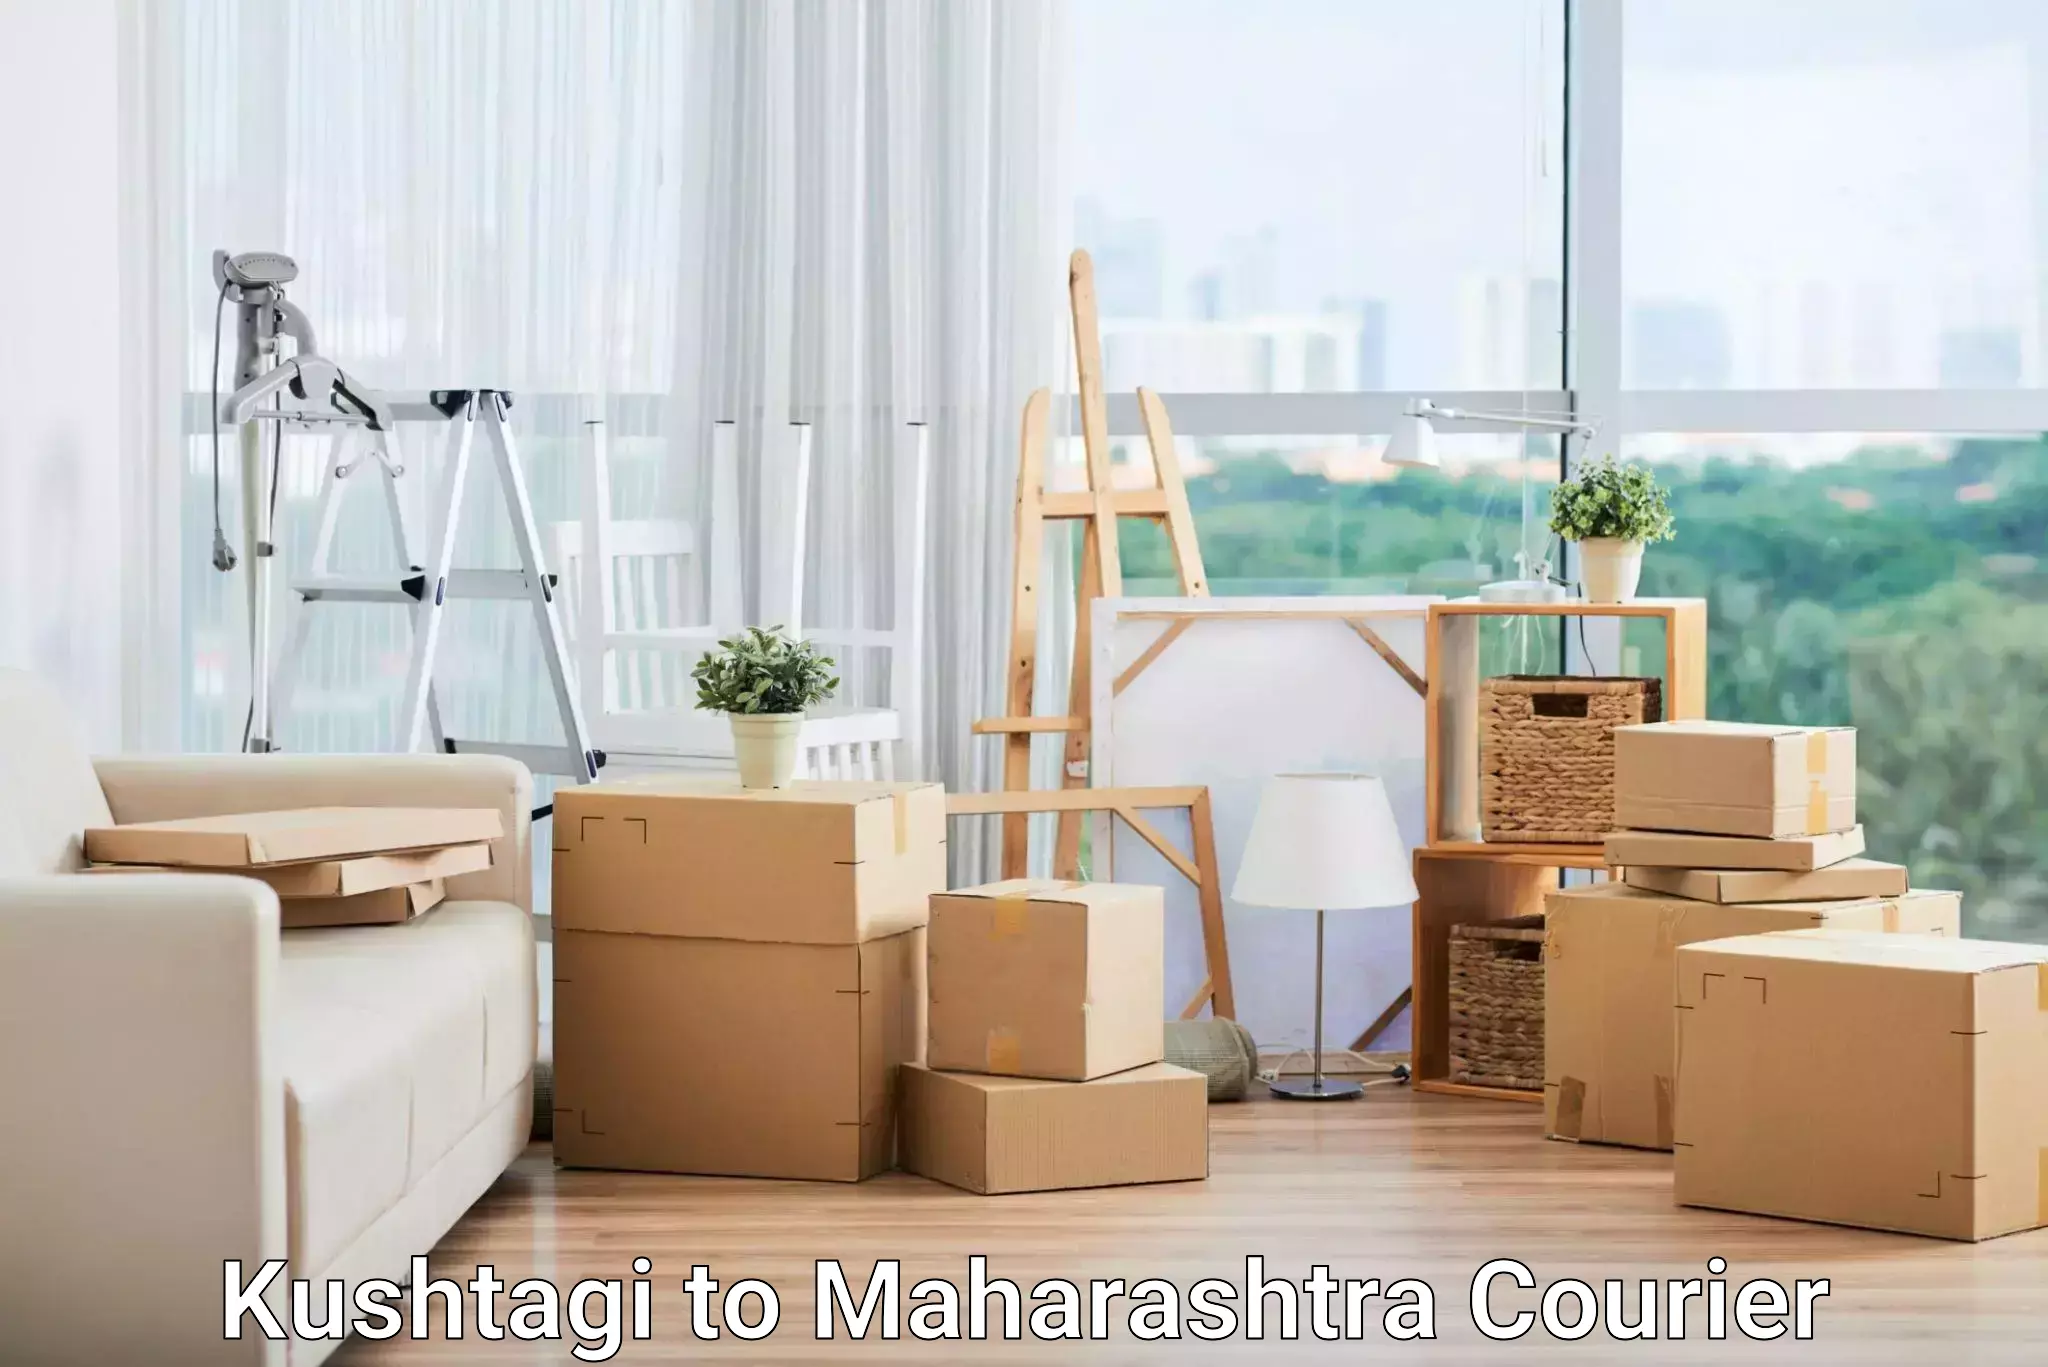 State-of-the-art courier technology Kushtagi to Maharashtra